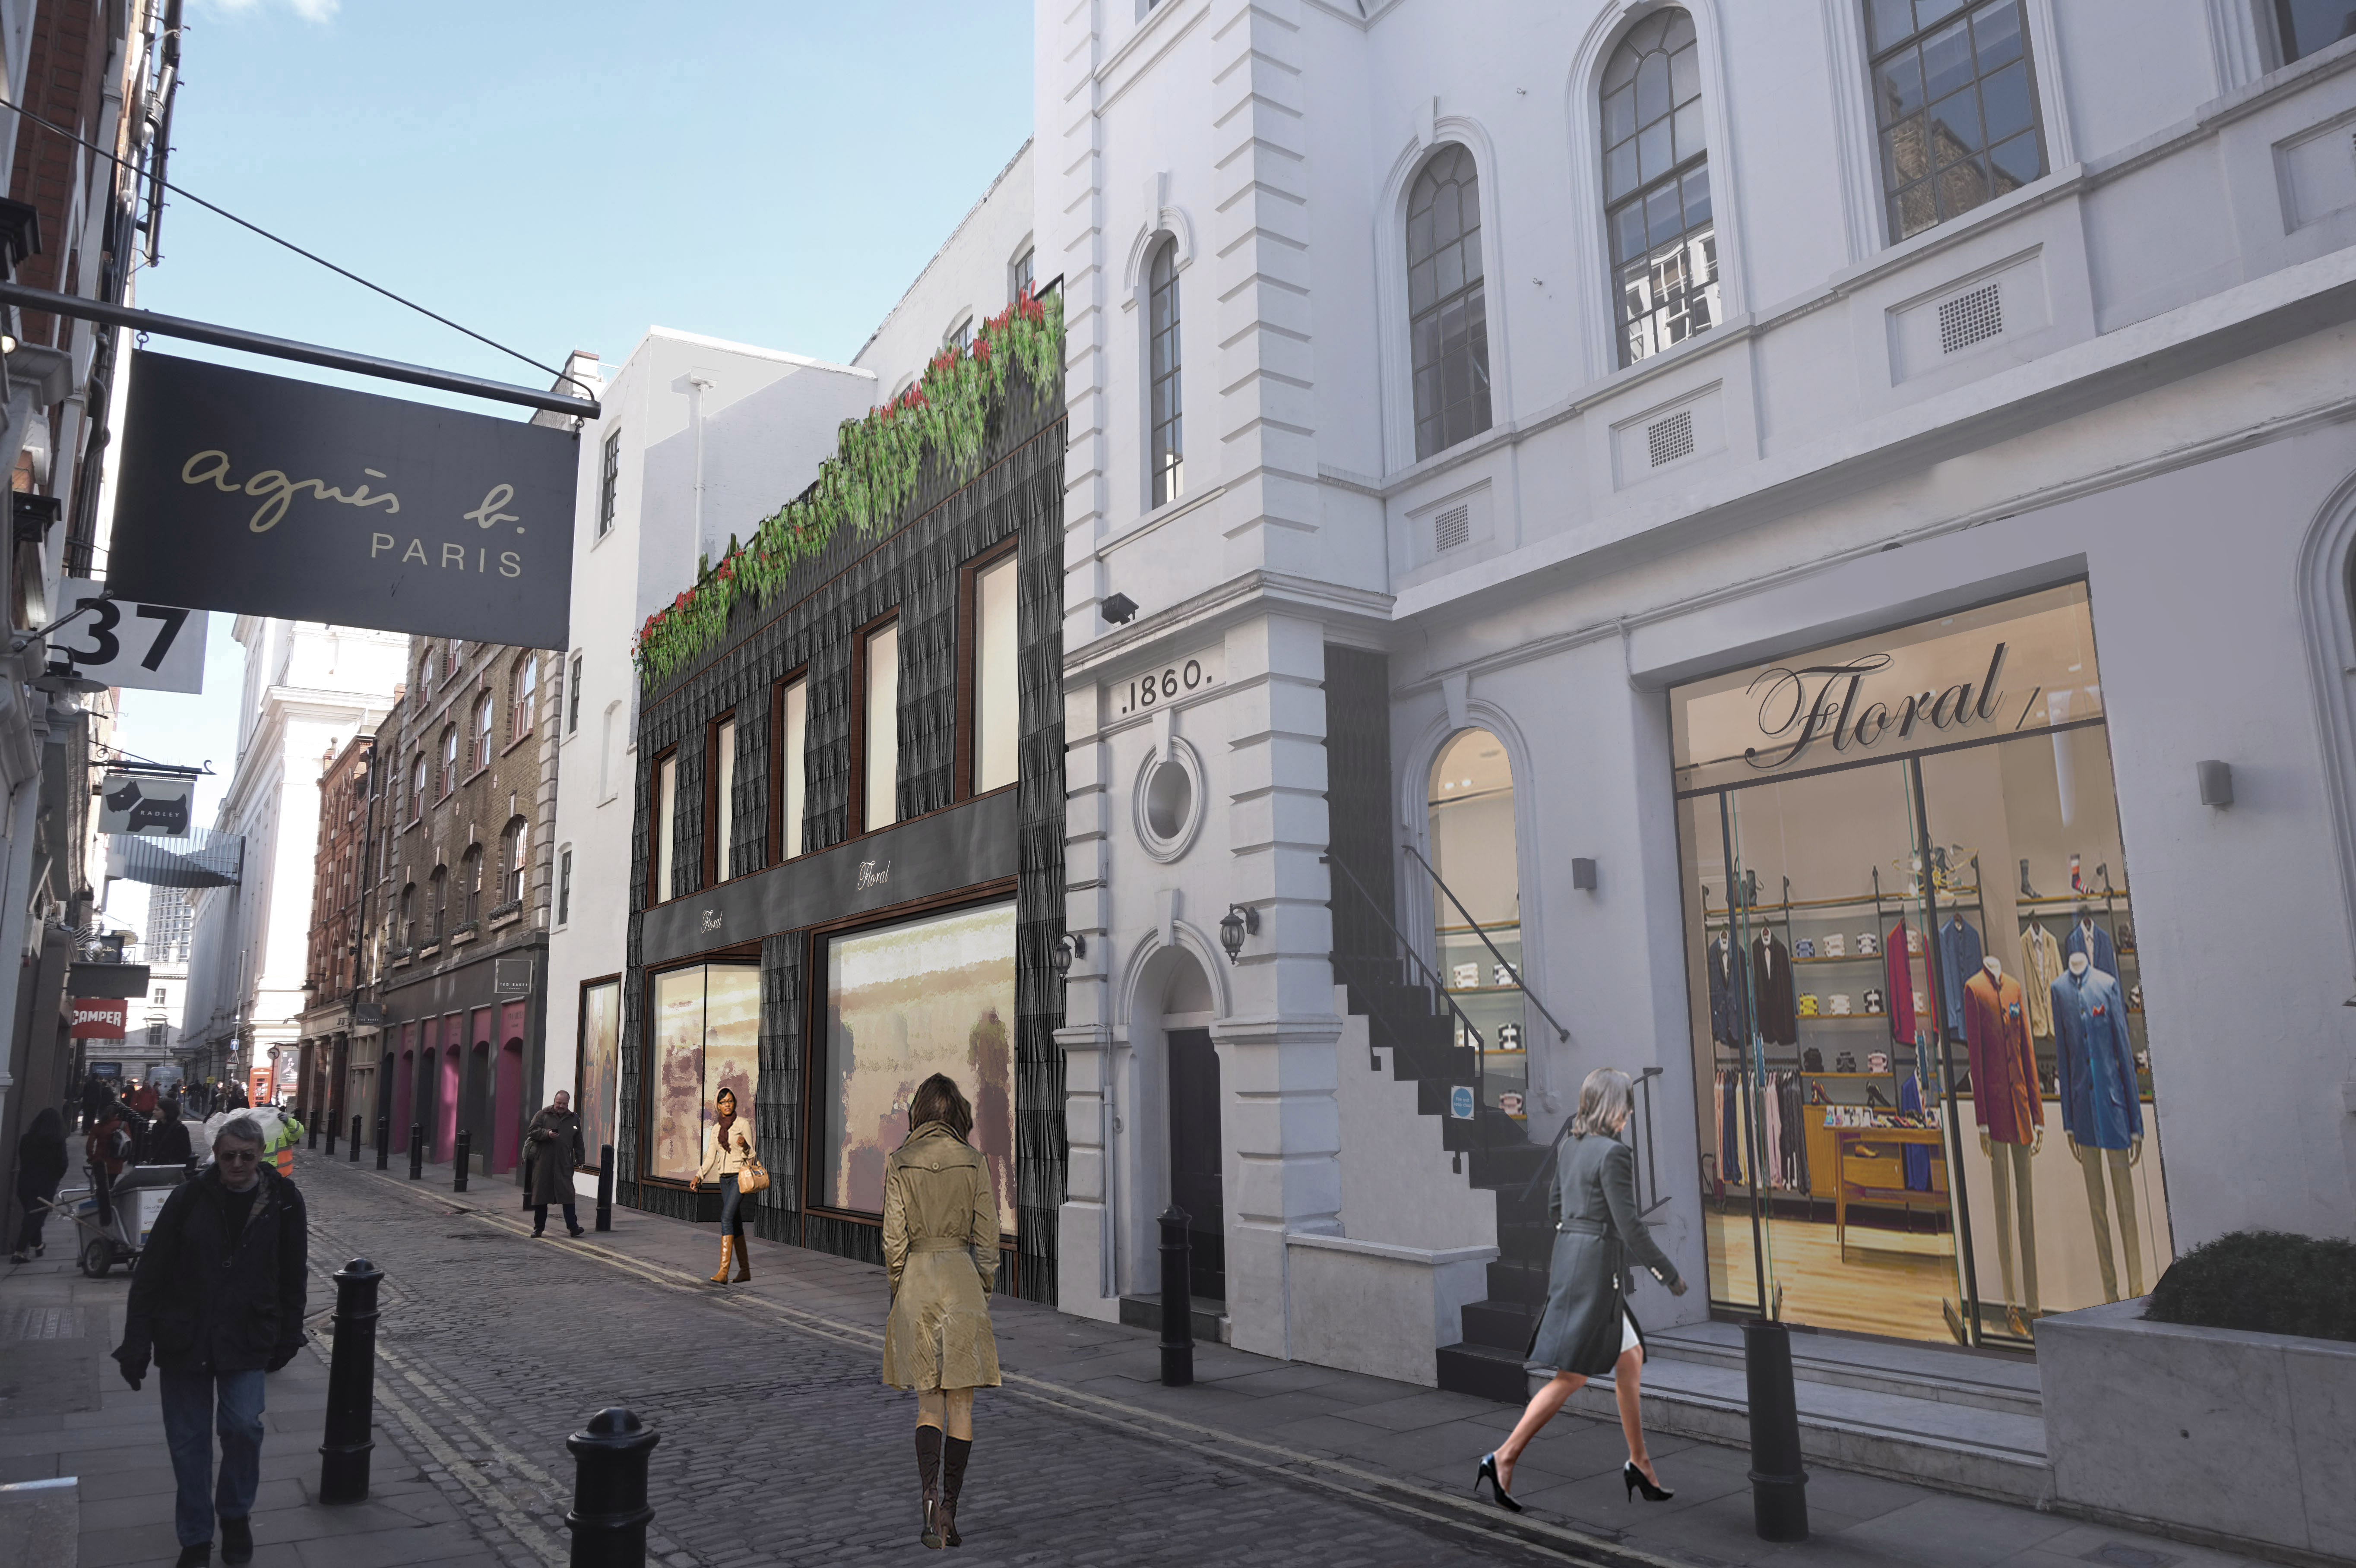 Planning Permission for Floral Street retail development